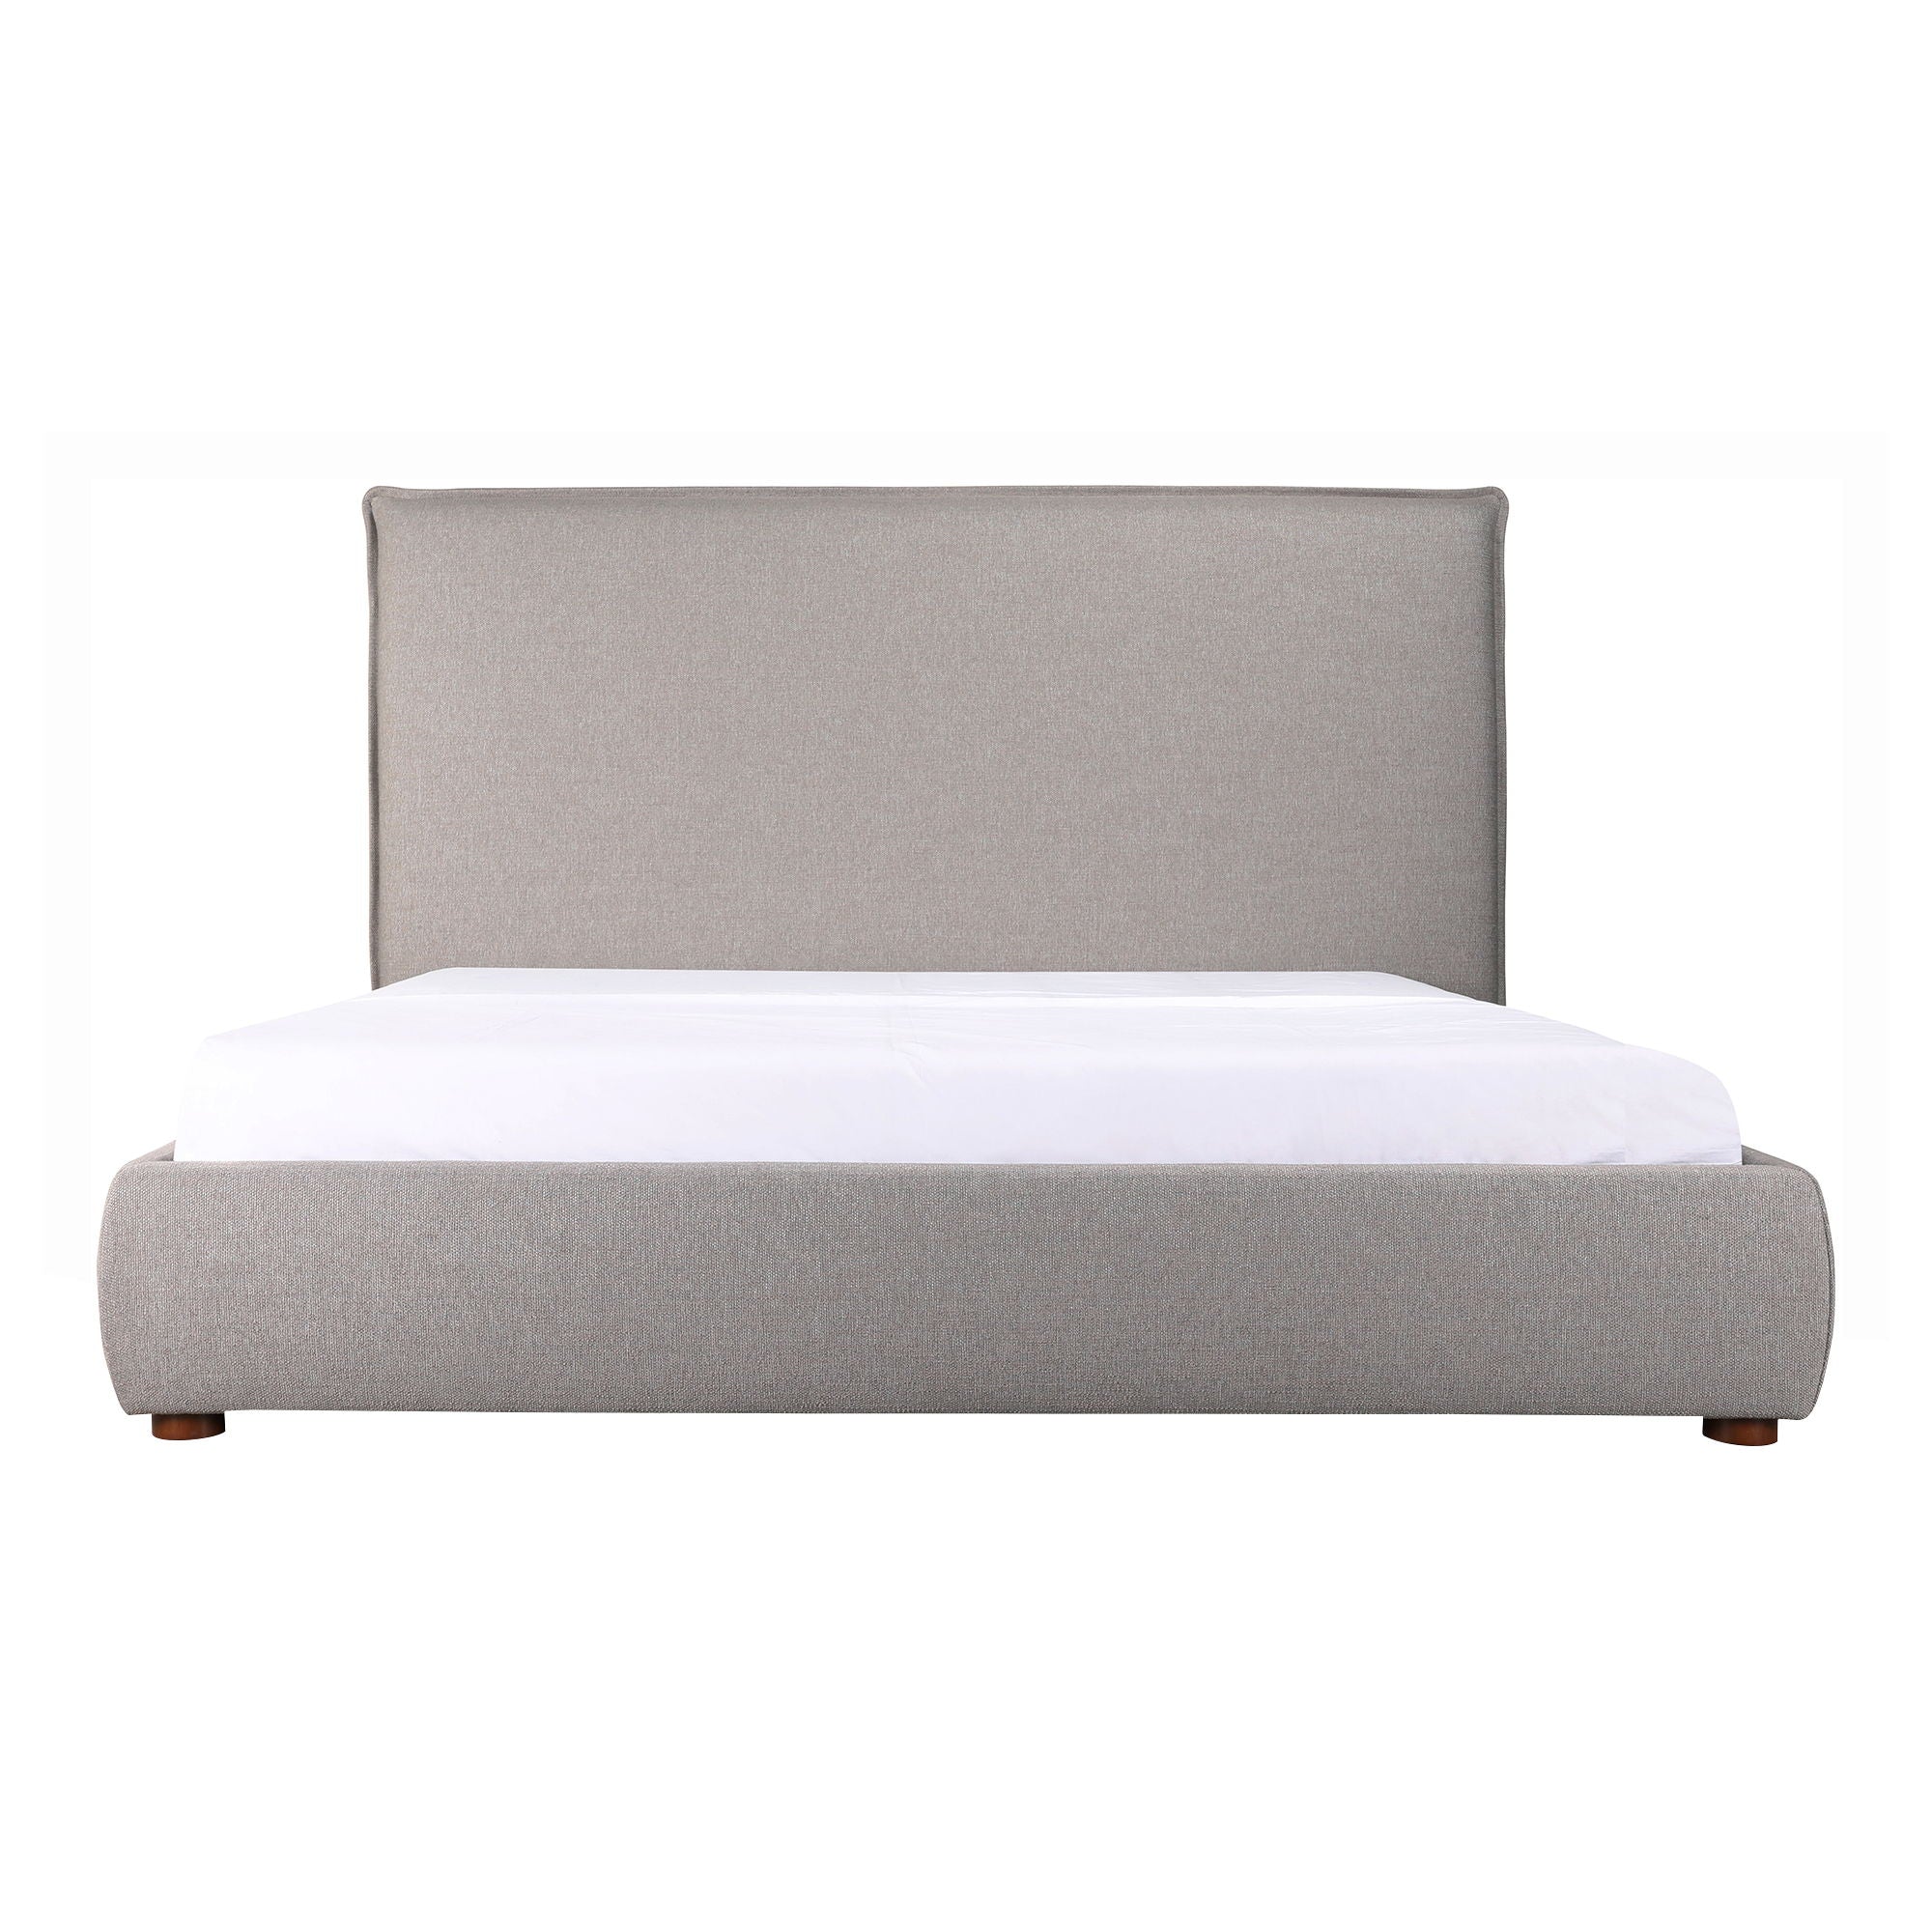 Luzon - King Bed Tall Linen Headboard - Greystone